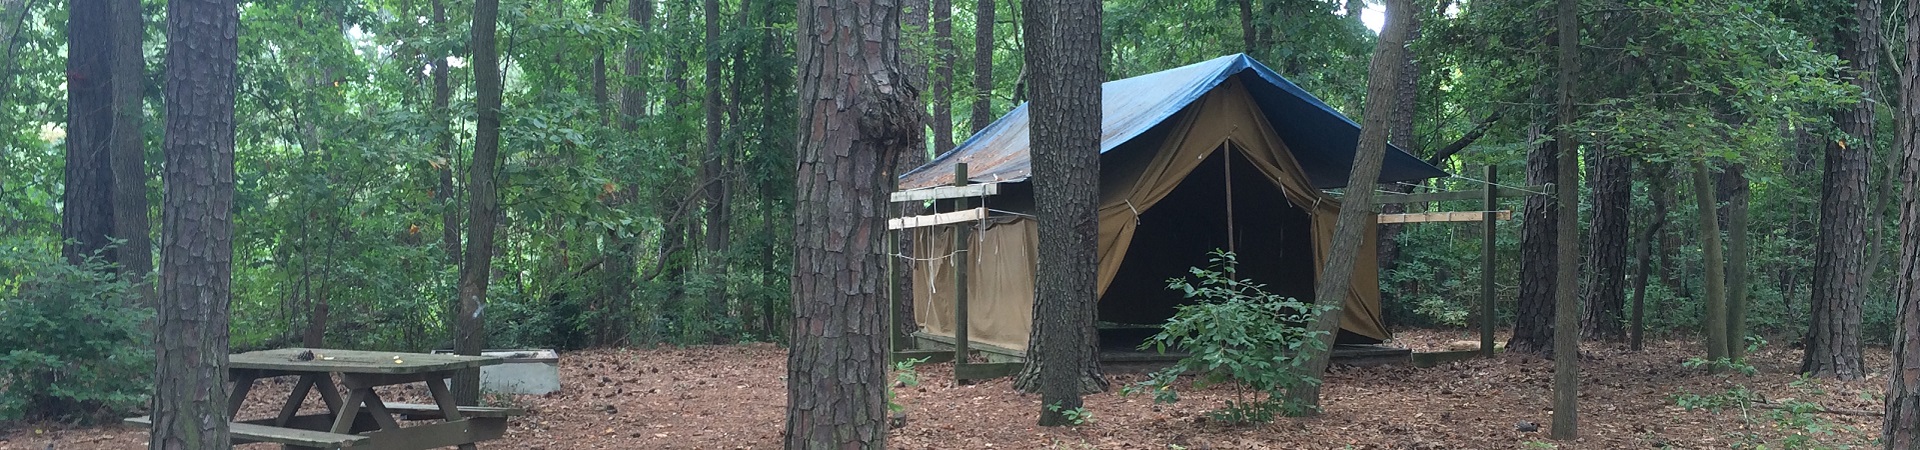  Platform tent at Camp Apasus in Norfolk, Virginia 